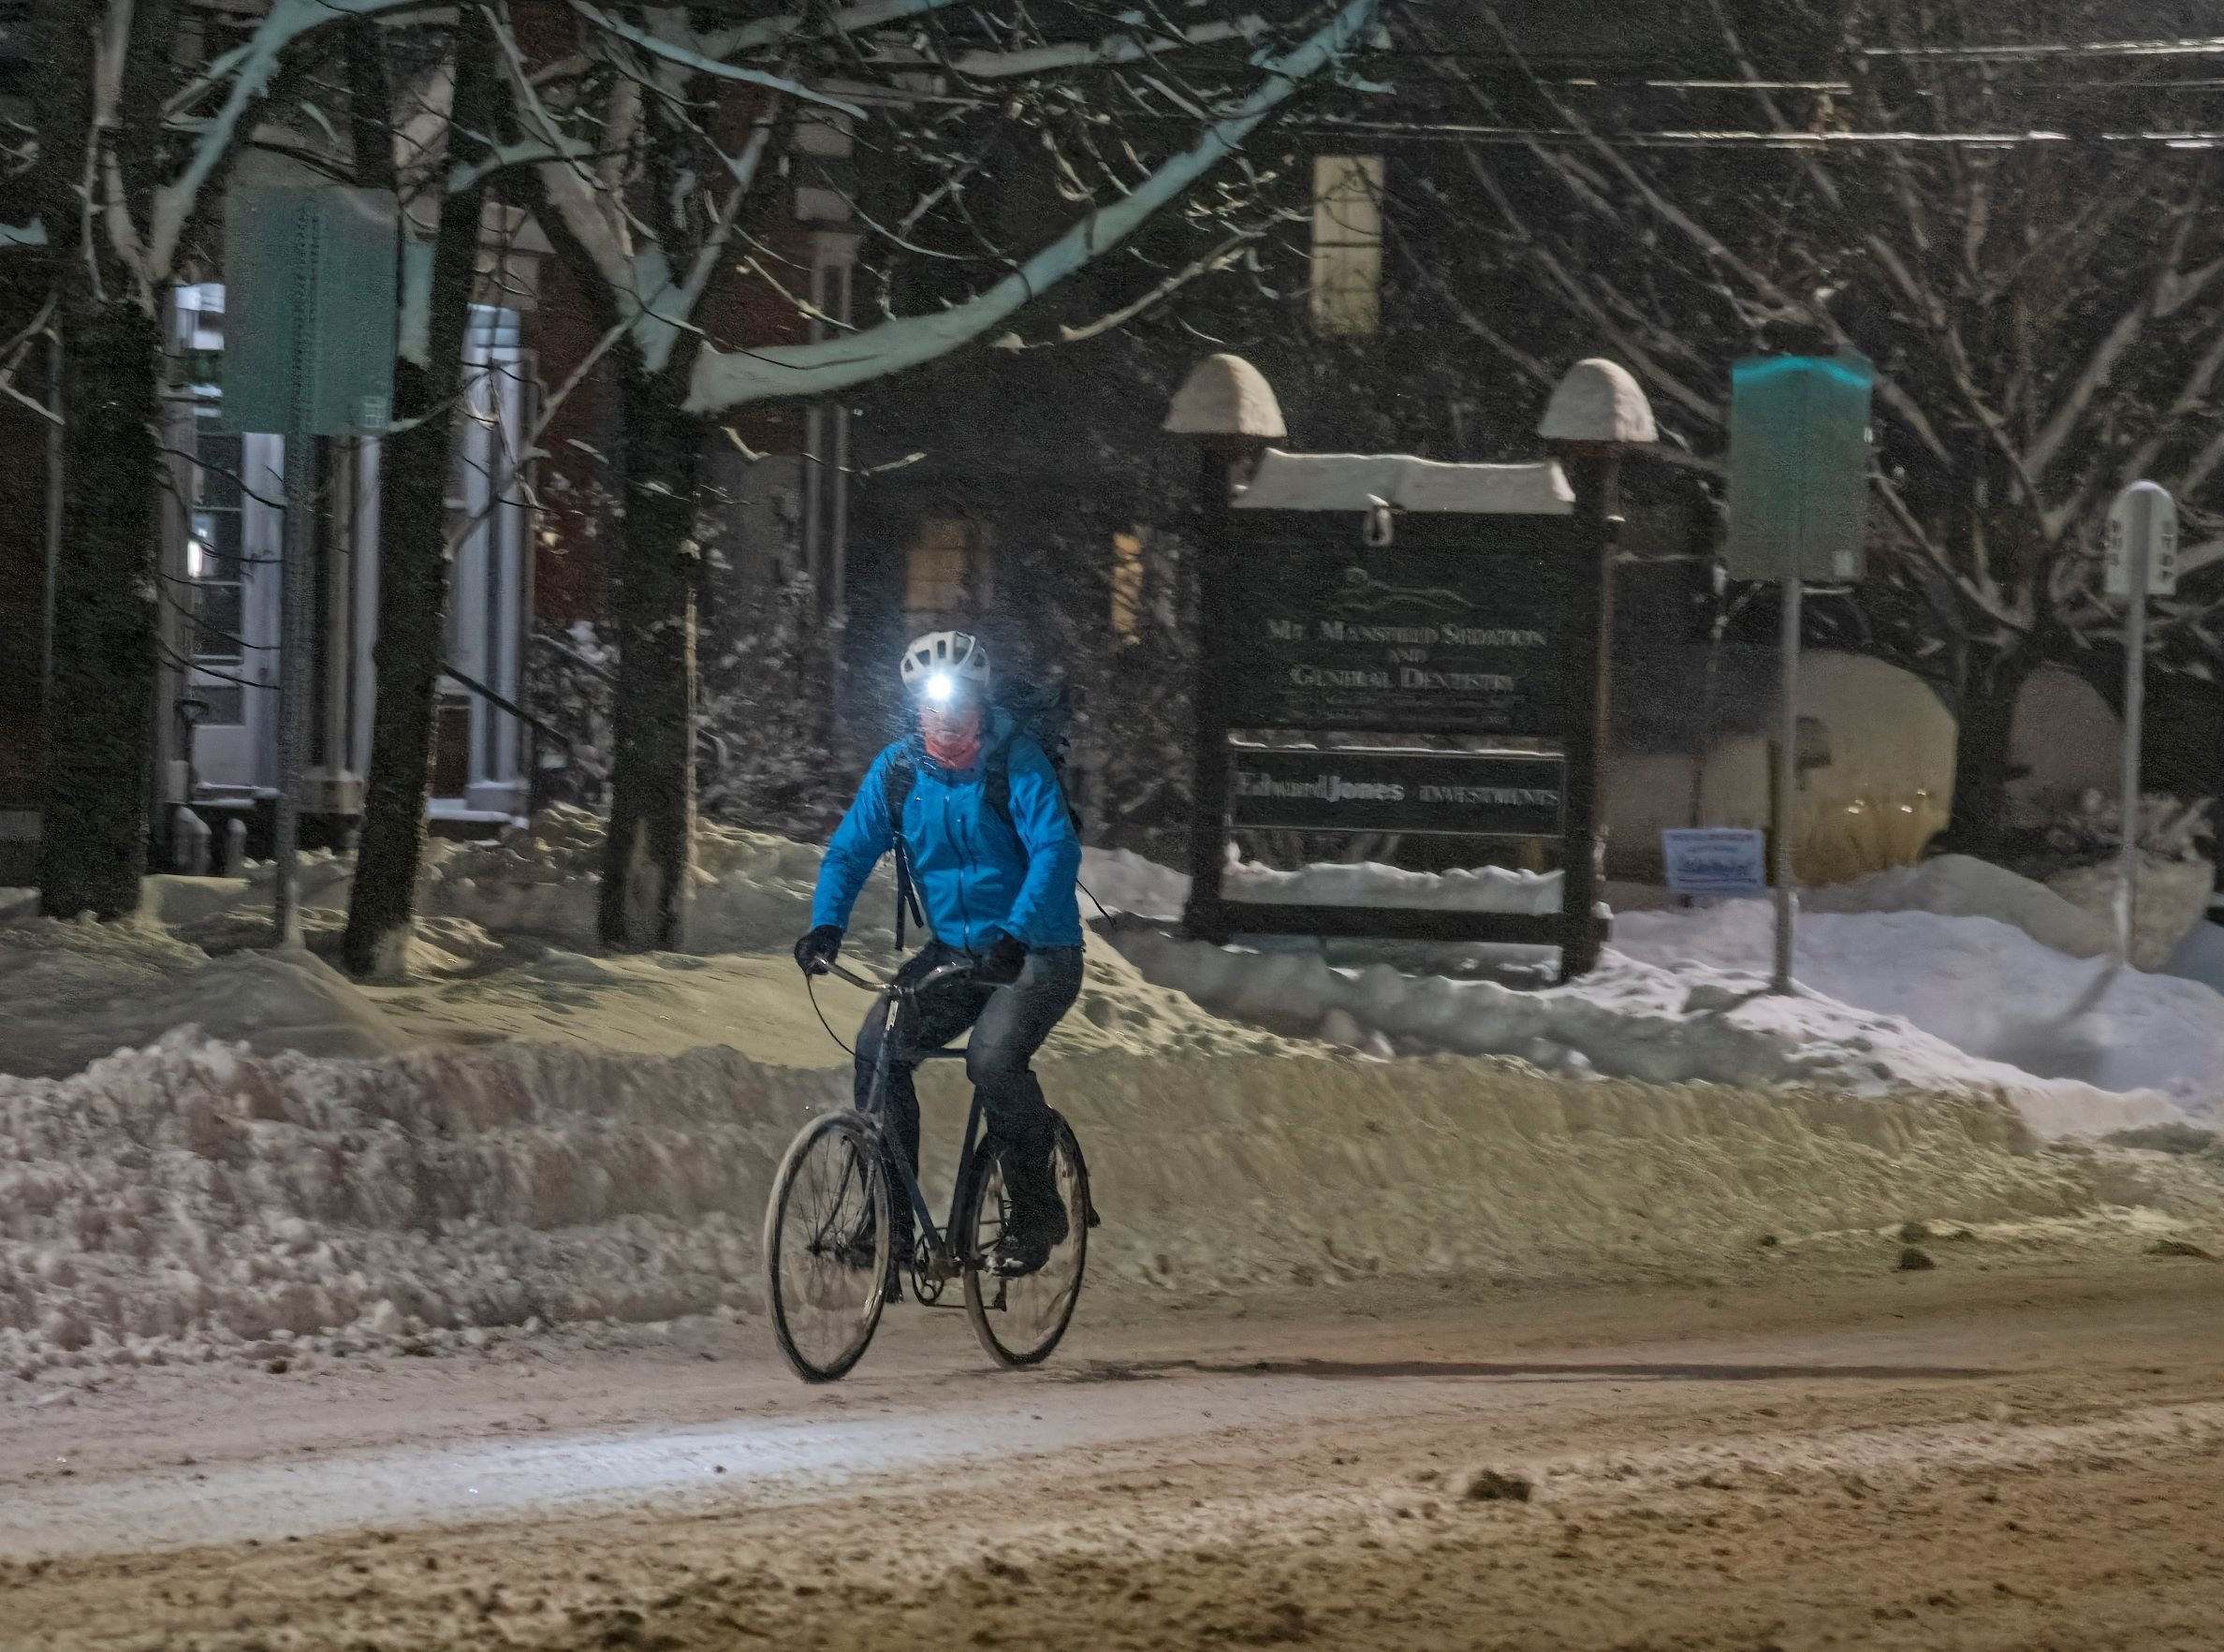  A lone biker makes their way down Main Street Monday night. Photo by Gordon Miller 